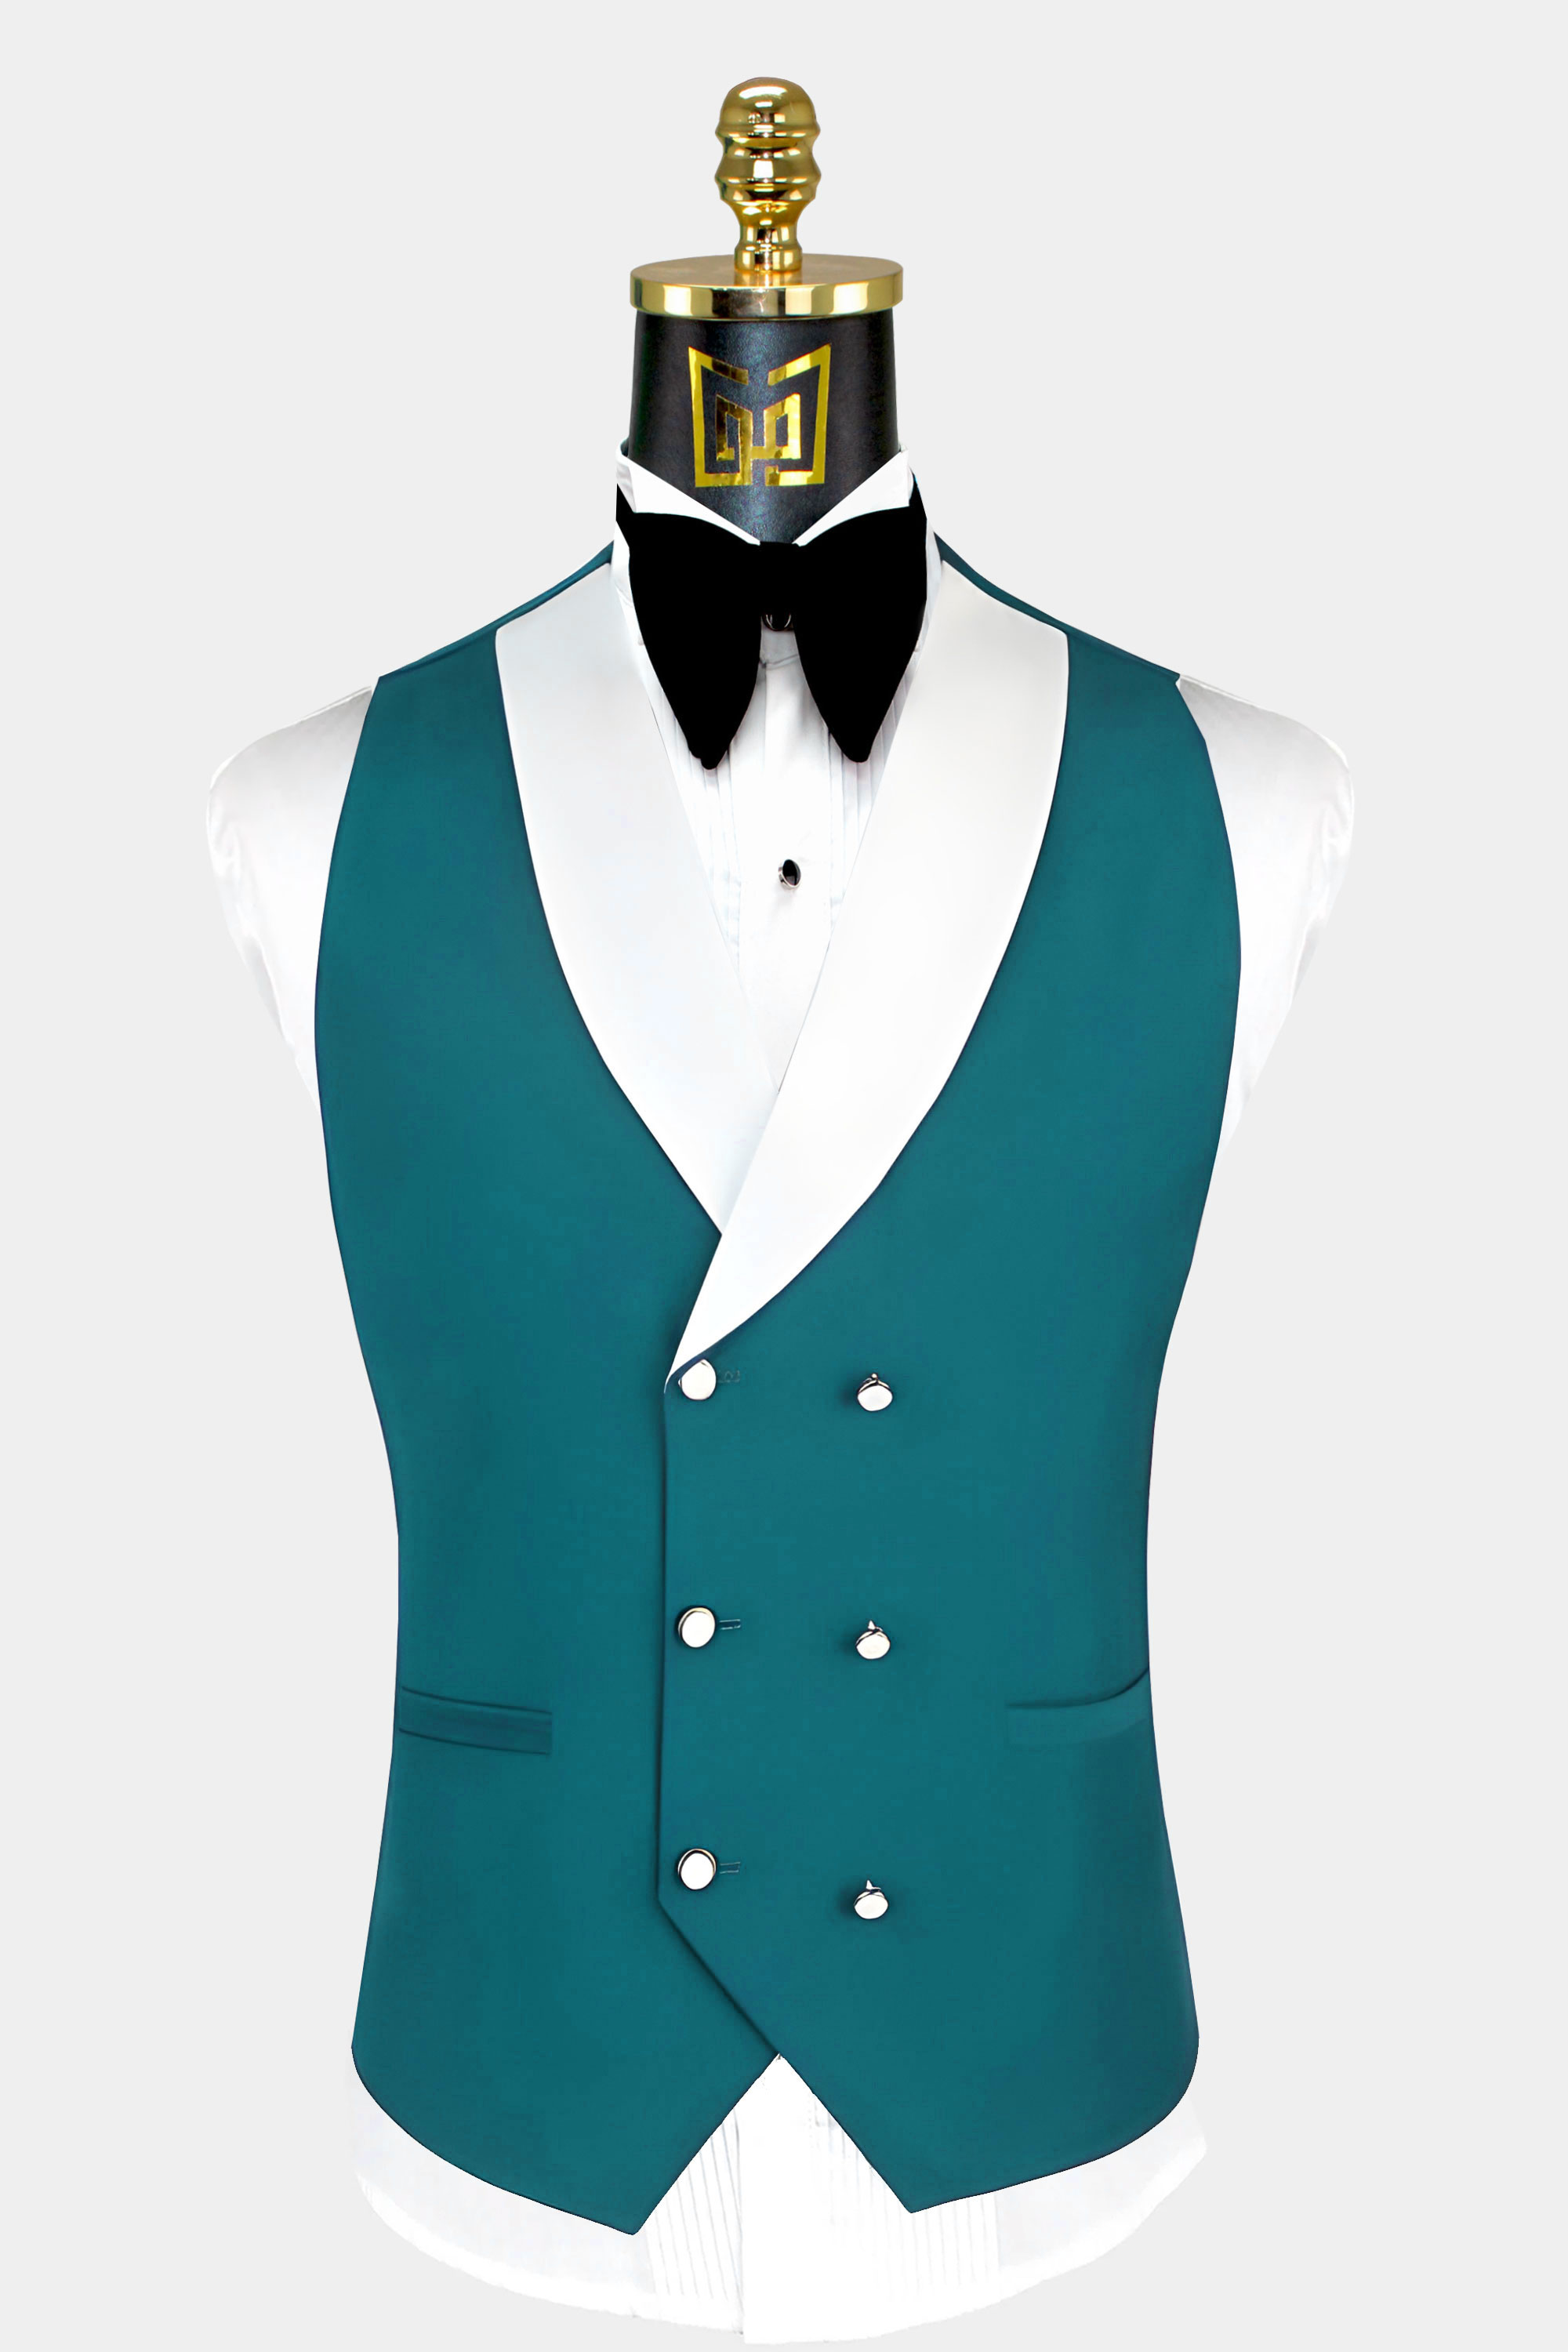 Teal-Blue-and-White-Tuxedo-Vest-from-Gentlemansguru.com.